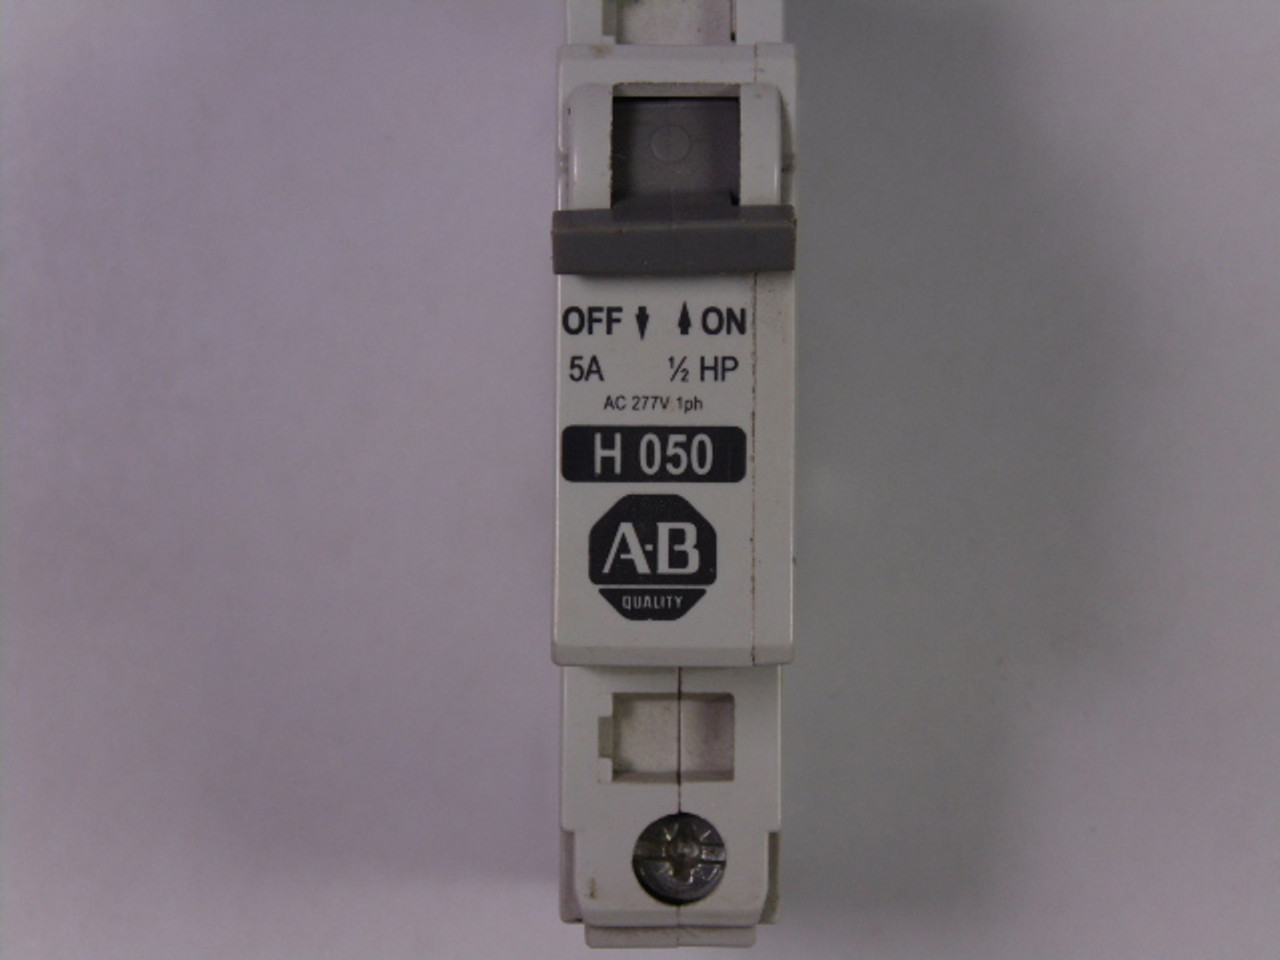 Allen-Bradley 1492-CB1-H050 Circuit Breaker 1Pole  5Amp USED